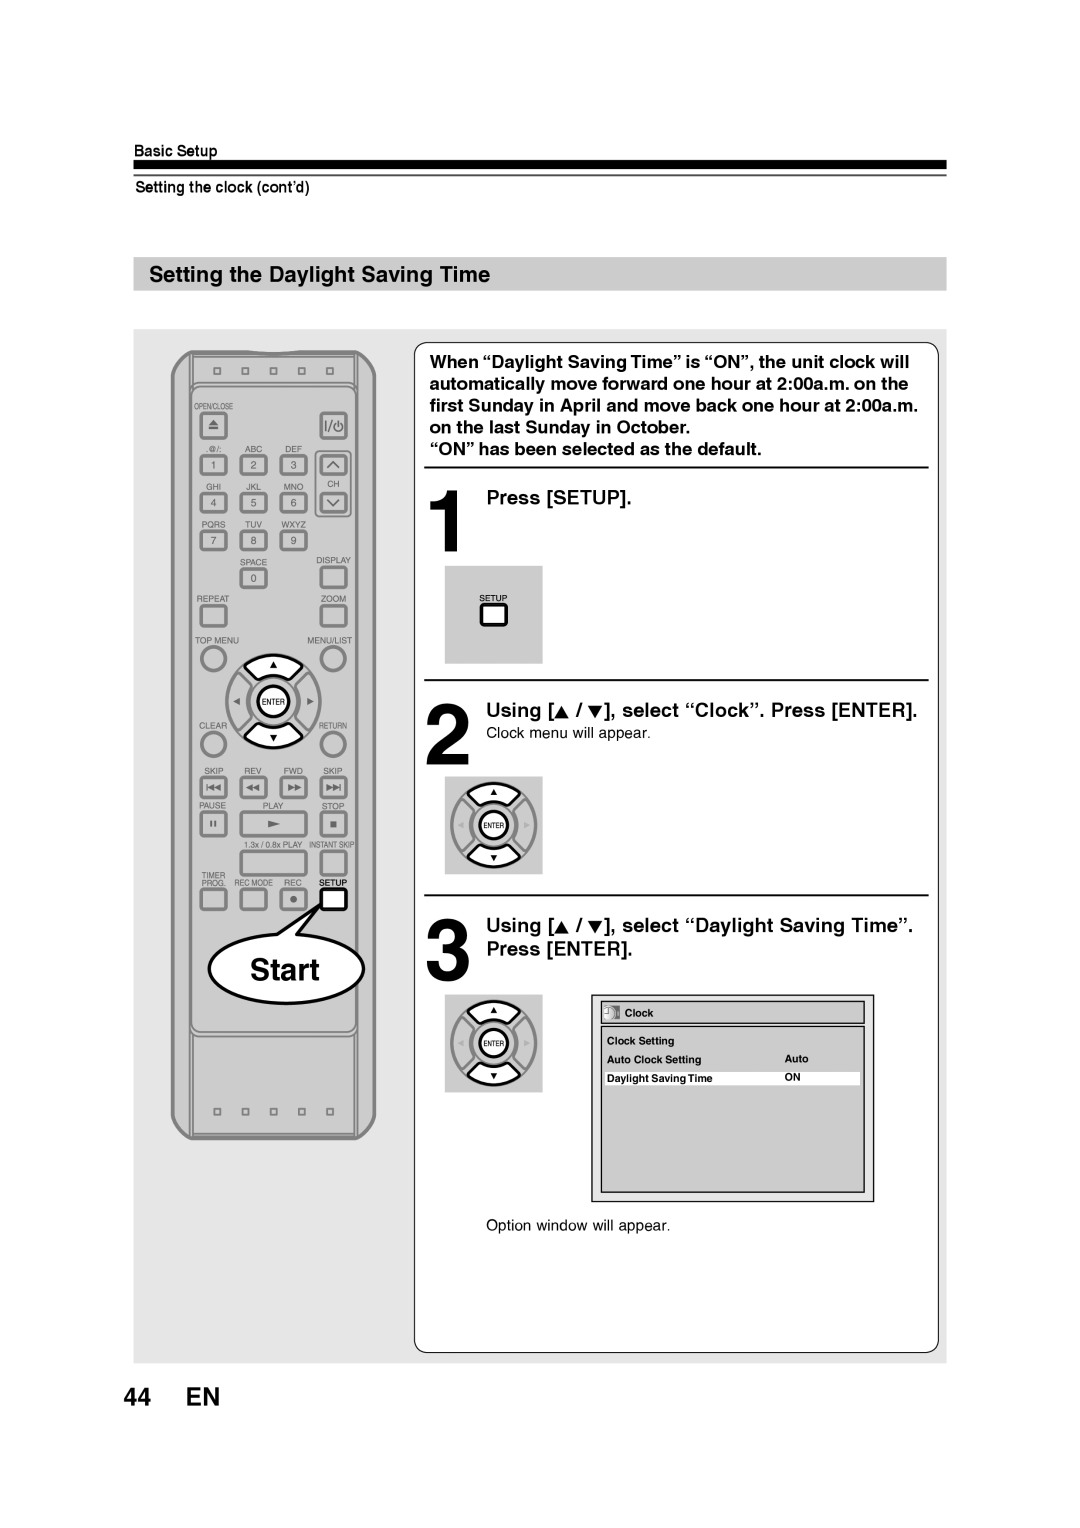 Toshiba D-RW2SU/D-RW2SC manual 44 EN, Setting the Daylight Saving Time, Using K / L, select “Daylight Saving Time”, Start 